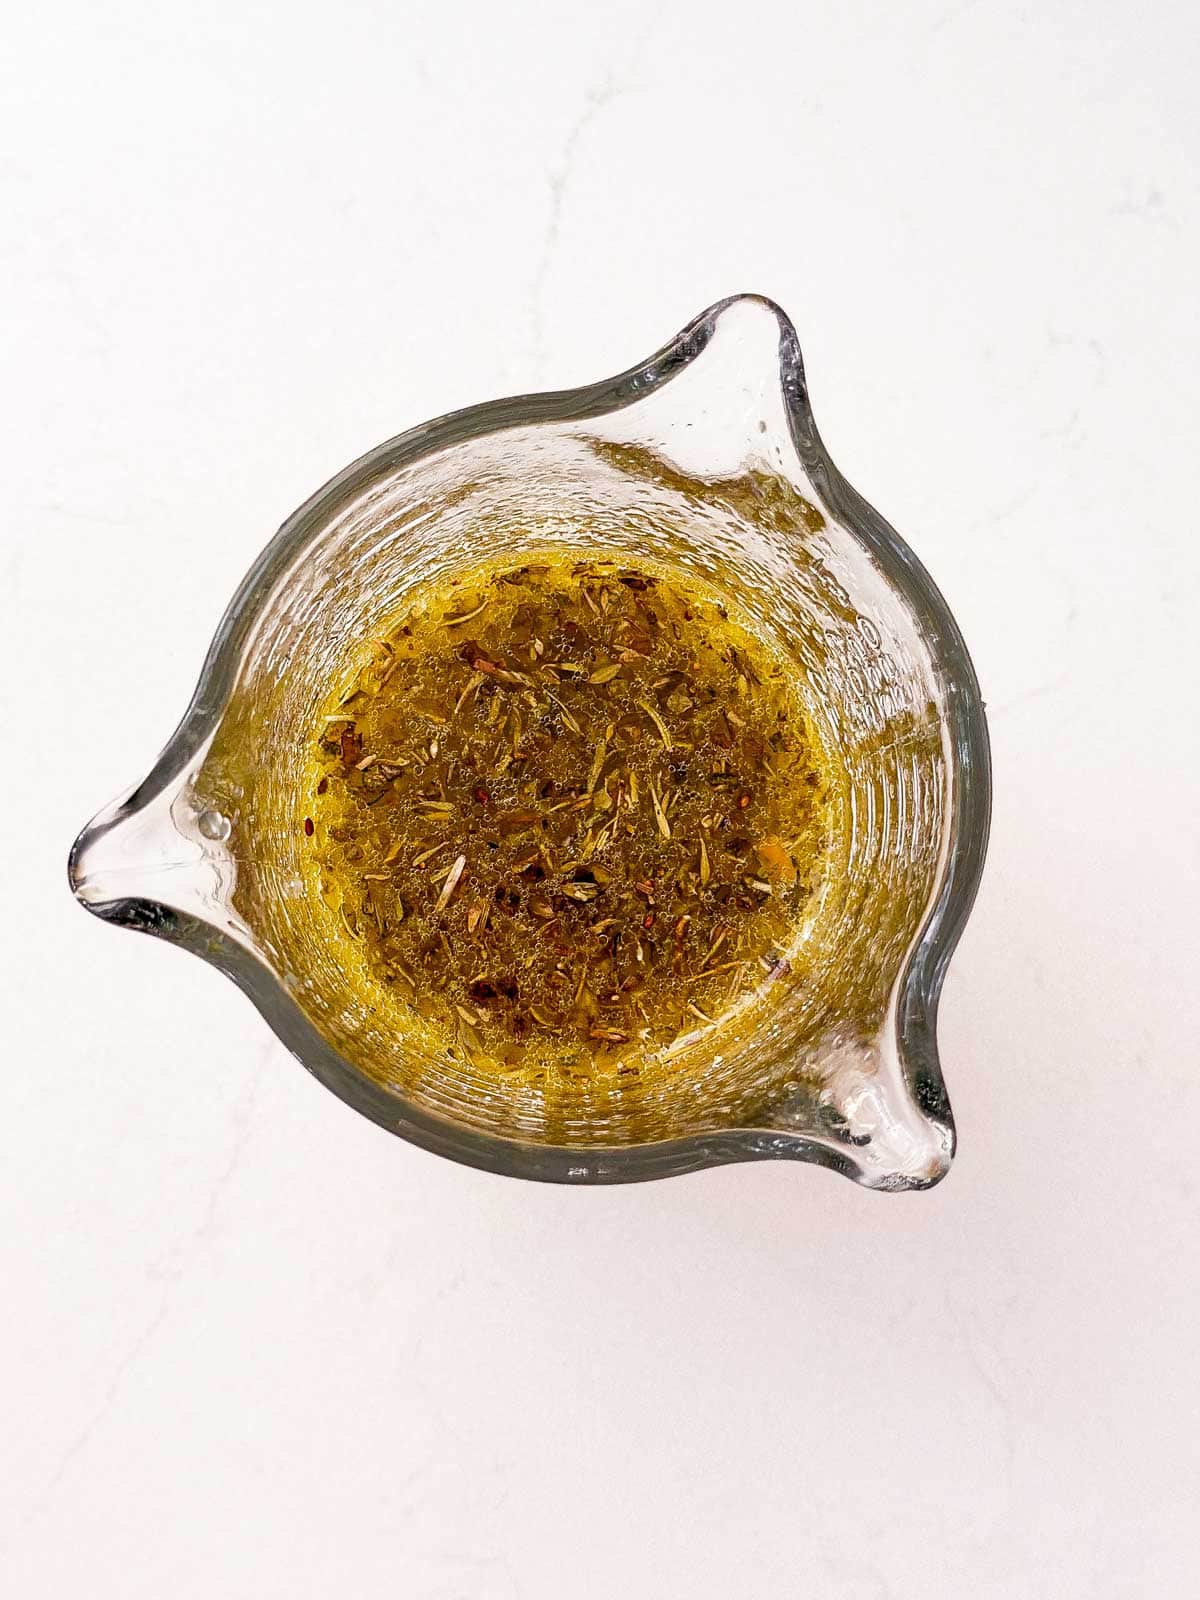 ovrehead view of lemon garlic chicken marinade in glass measuring jug